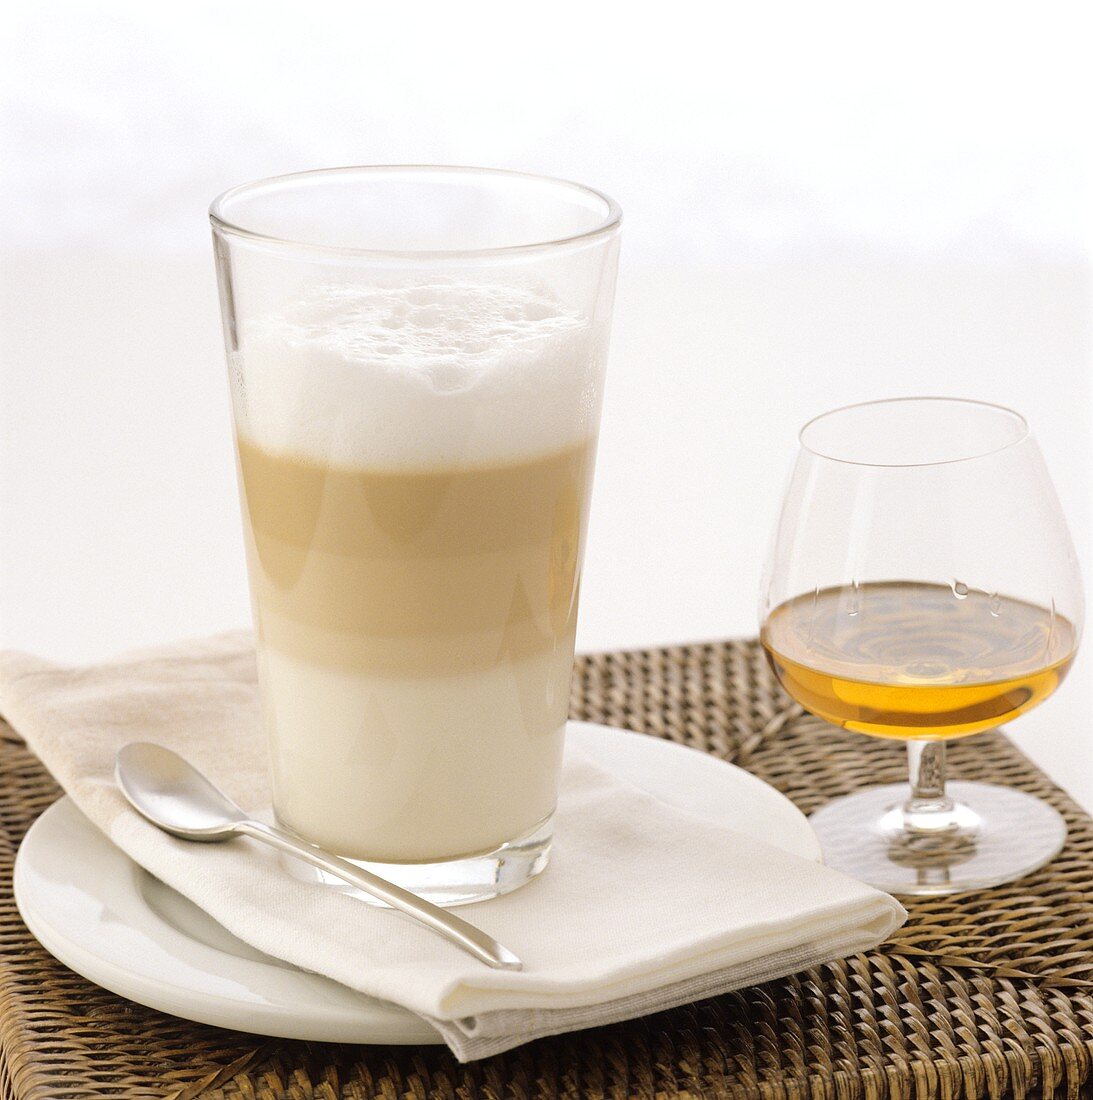 A glass of latte macchiato and a glass of cognac